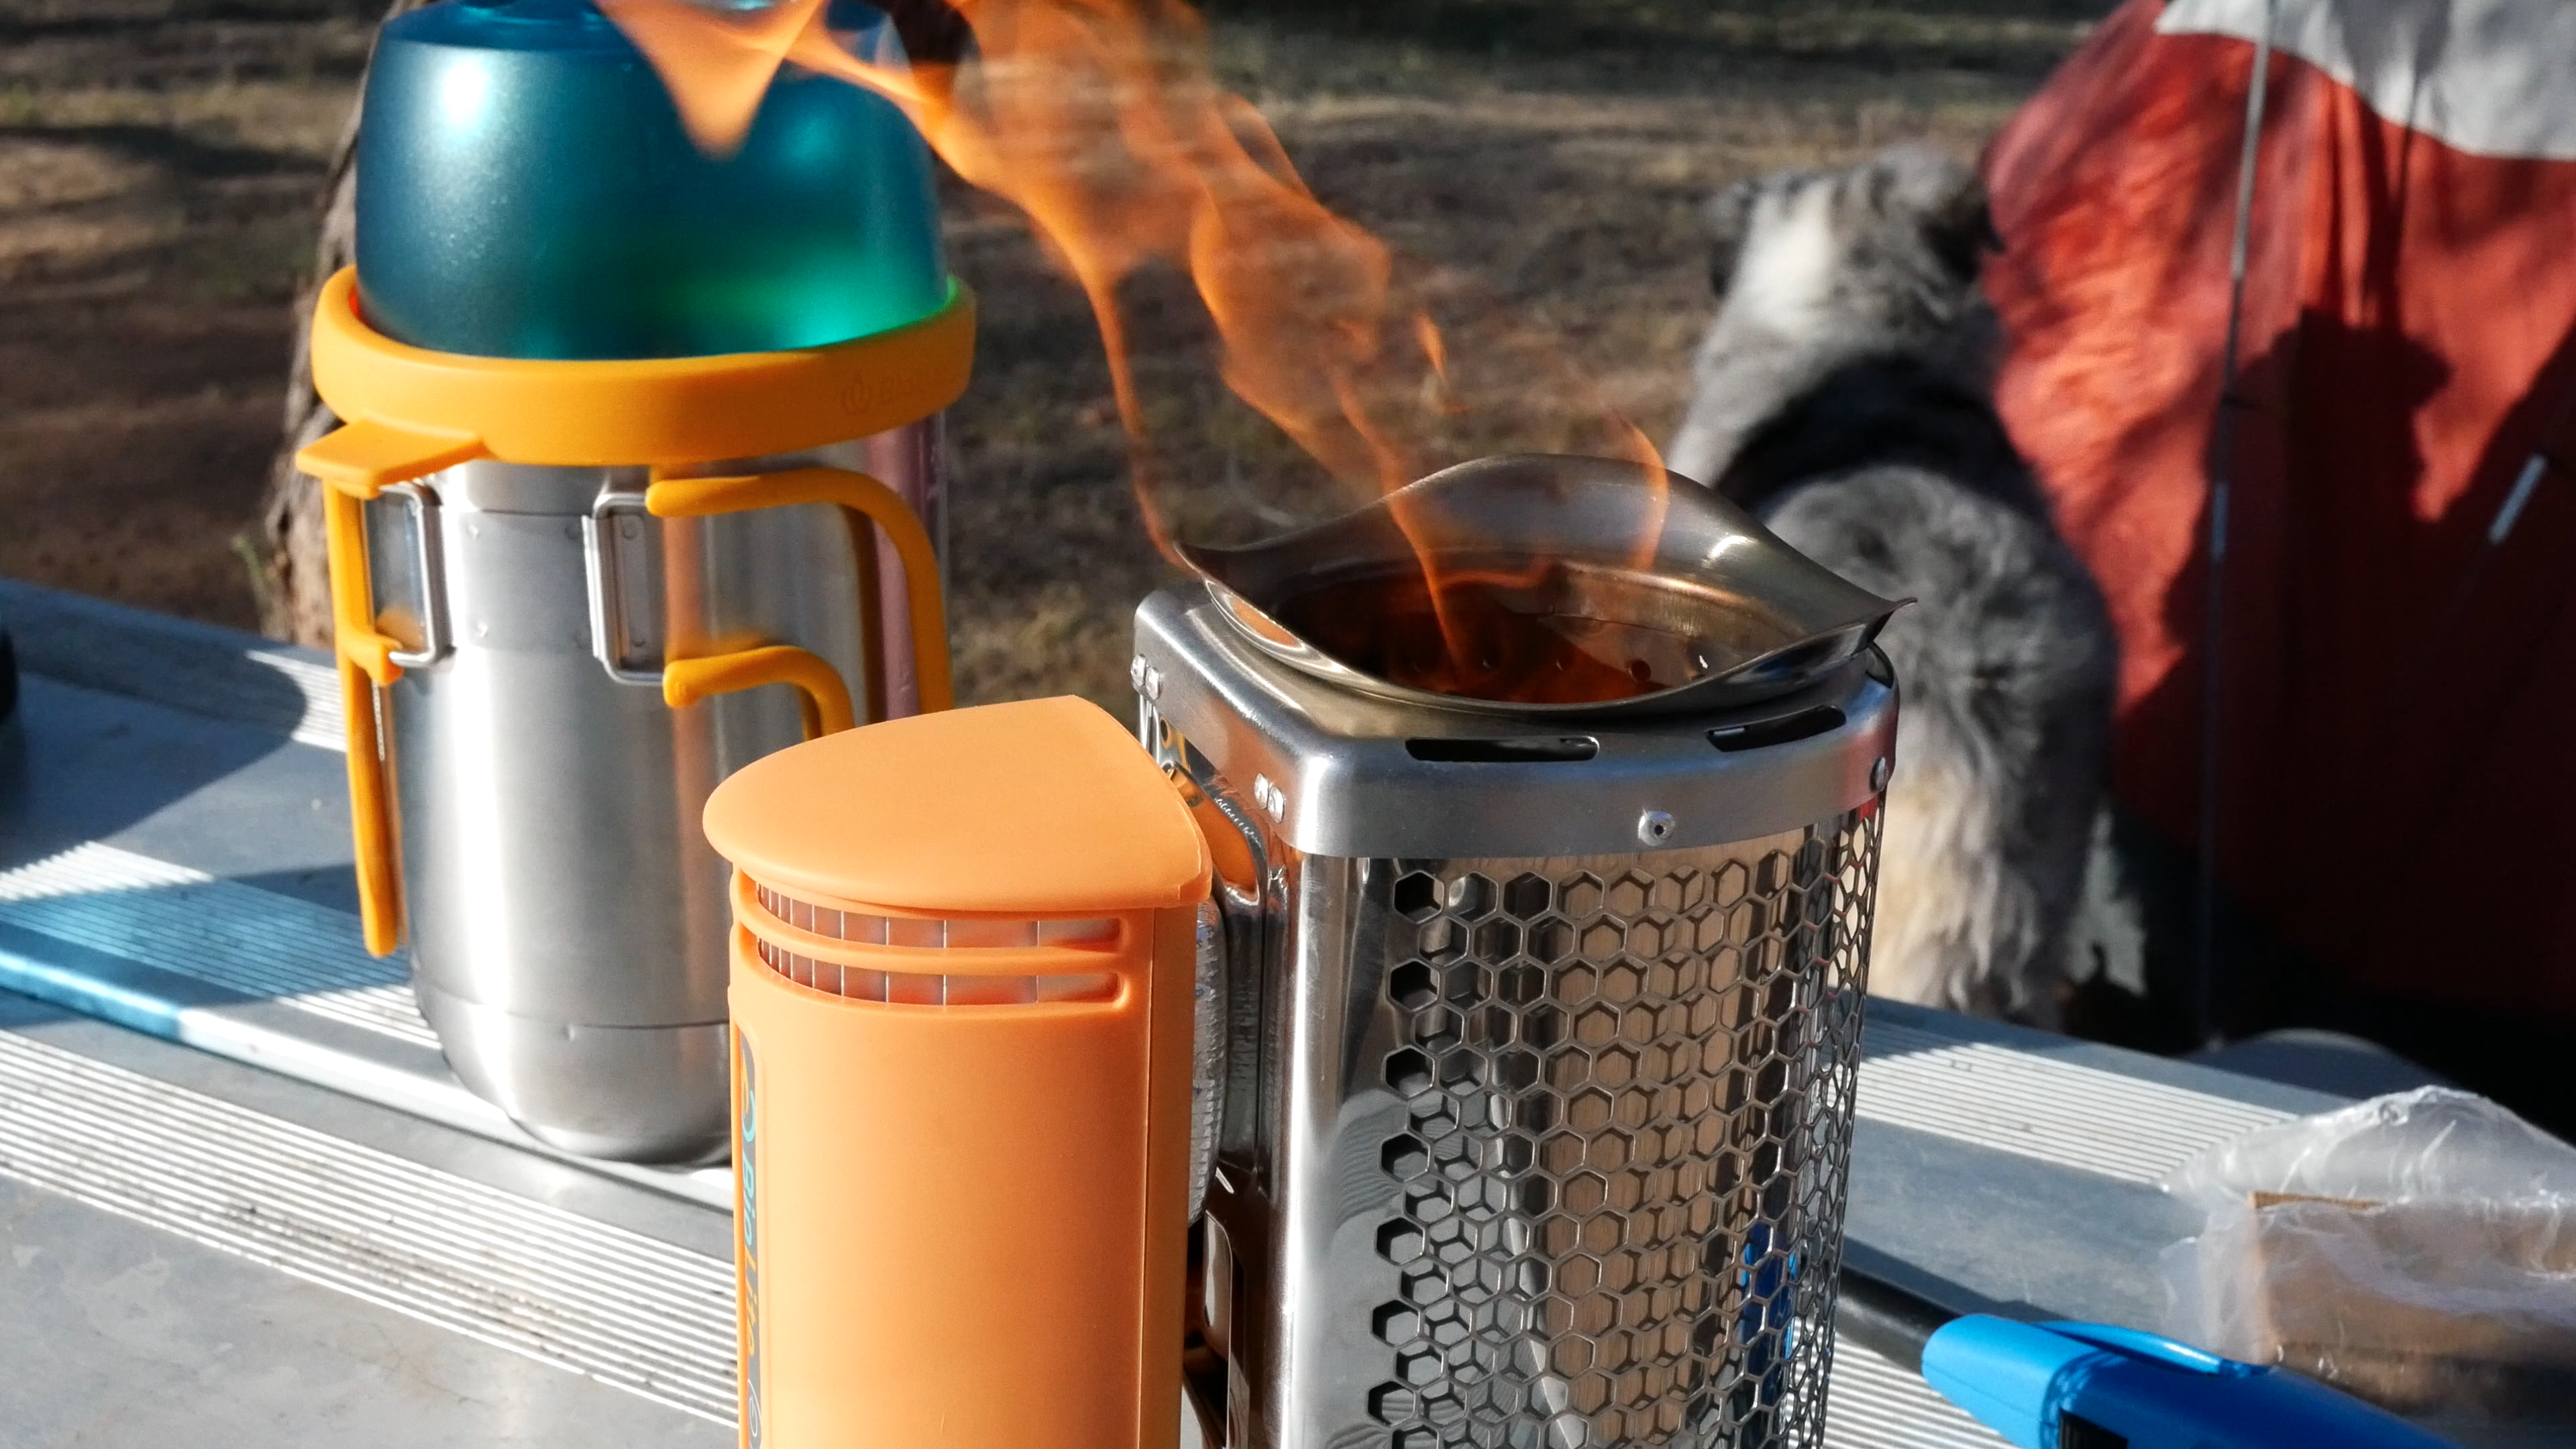 biolite camp stove attachments accessories review 3